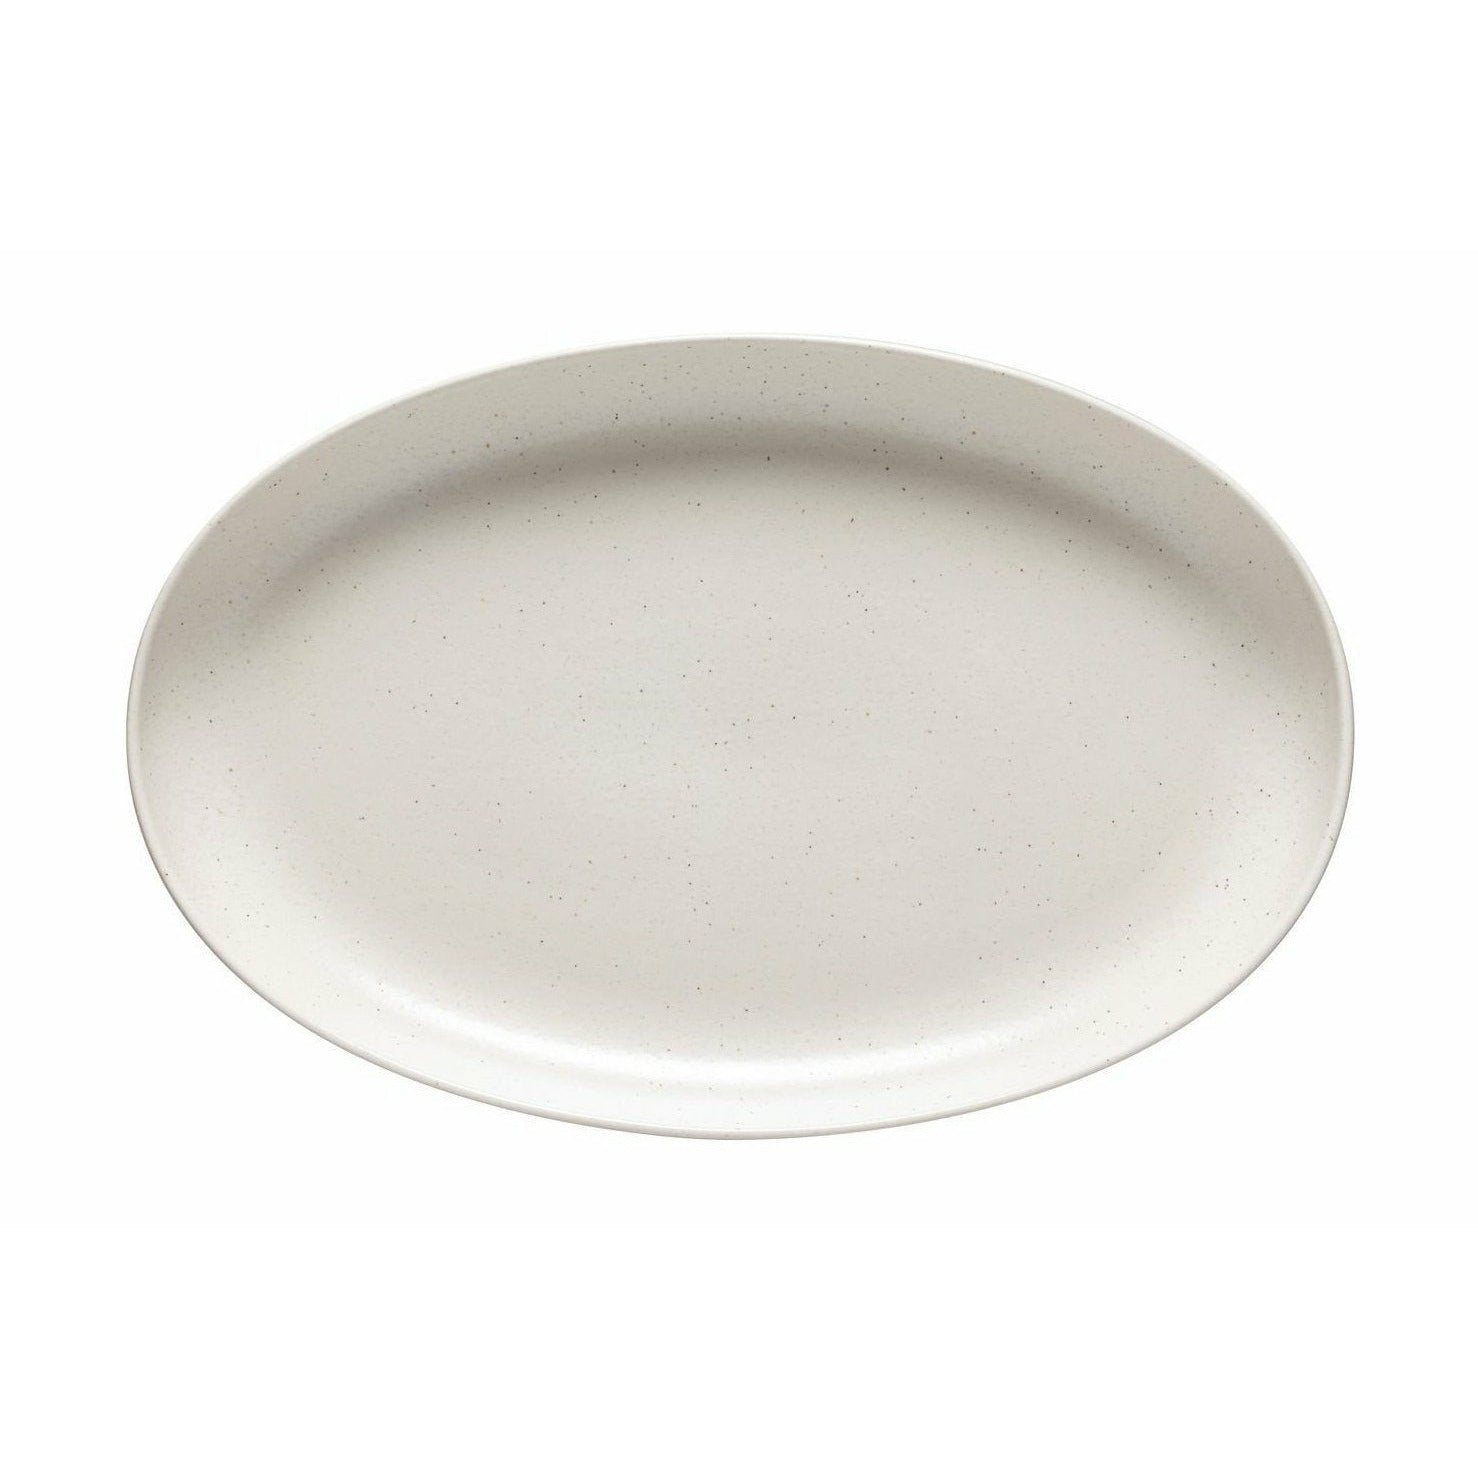 Casafina Oval Platter, wanilia